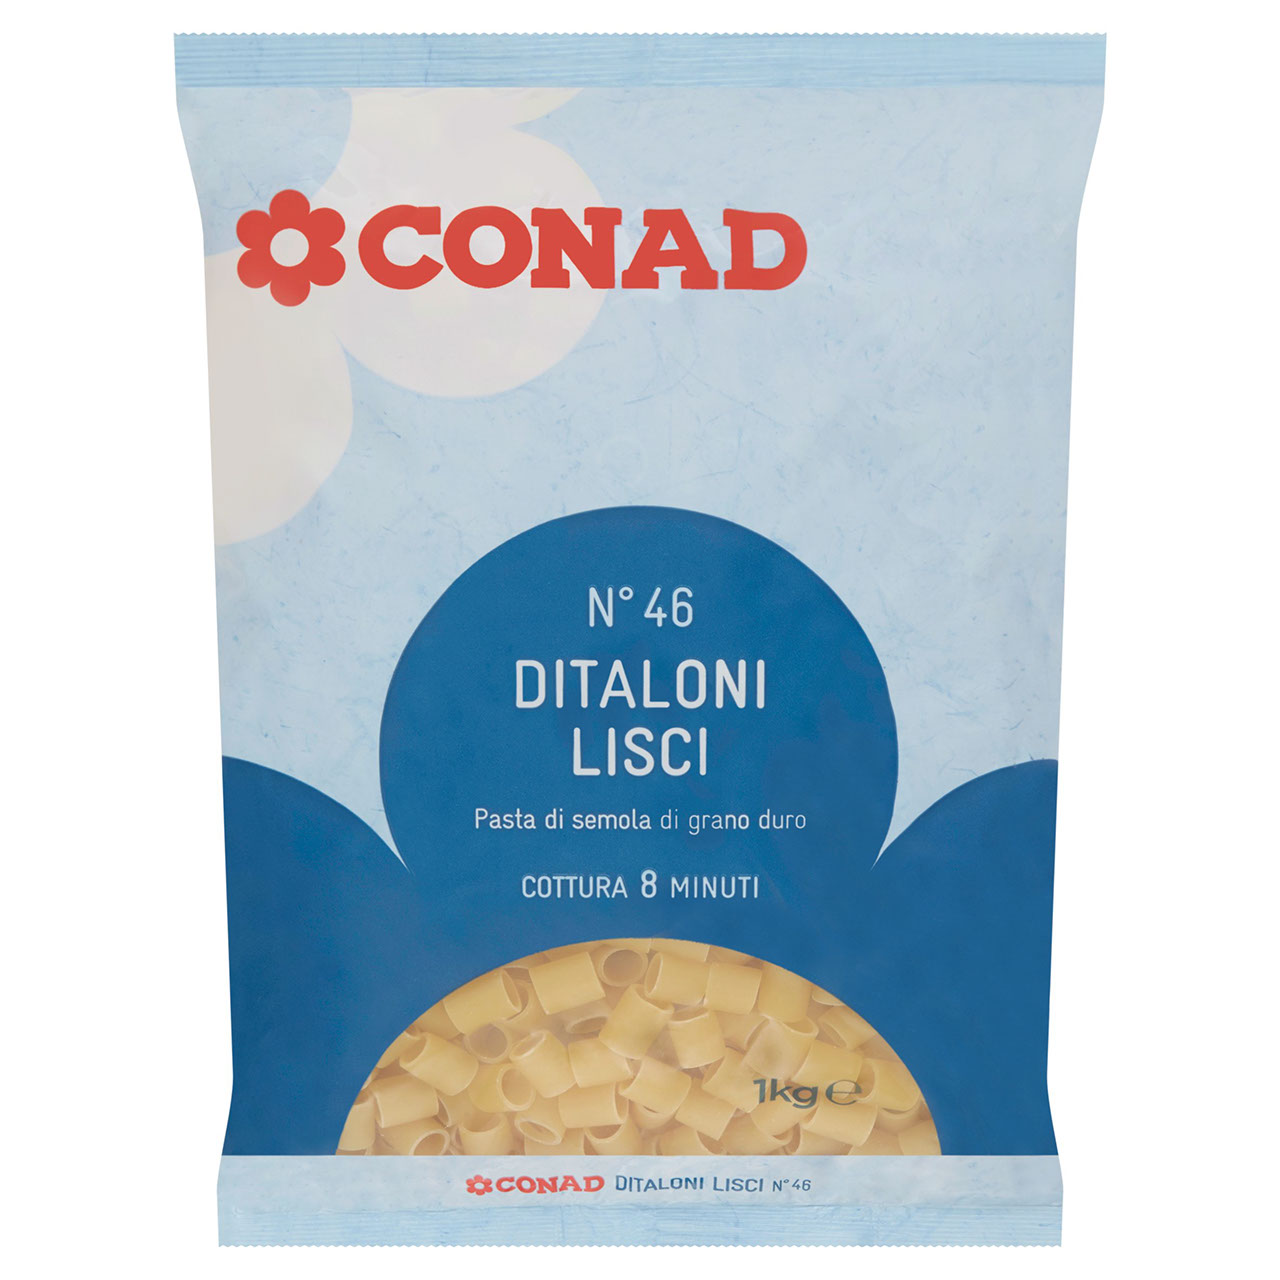 Ditaloni Lisci 1 kg Conad in vendita online